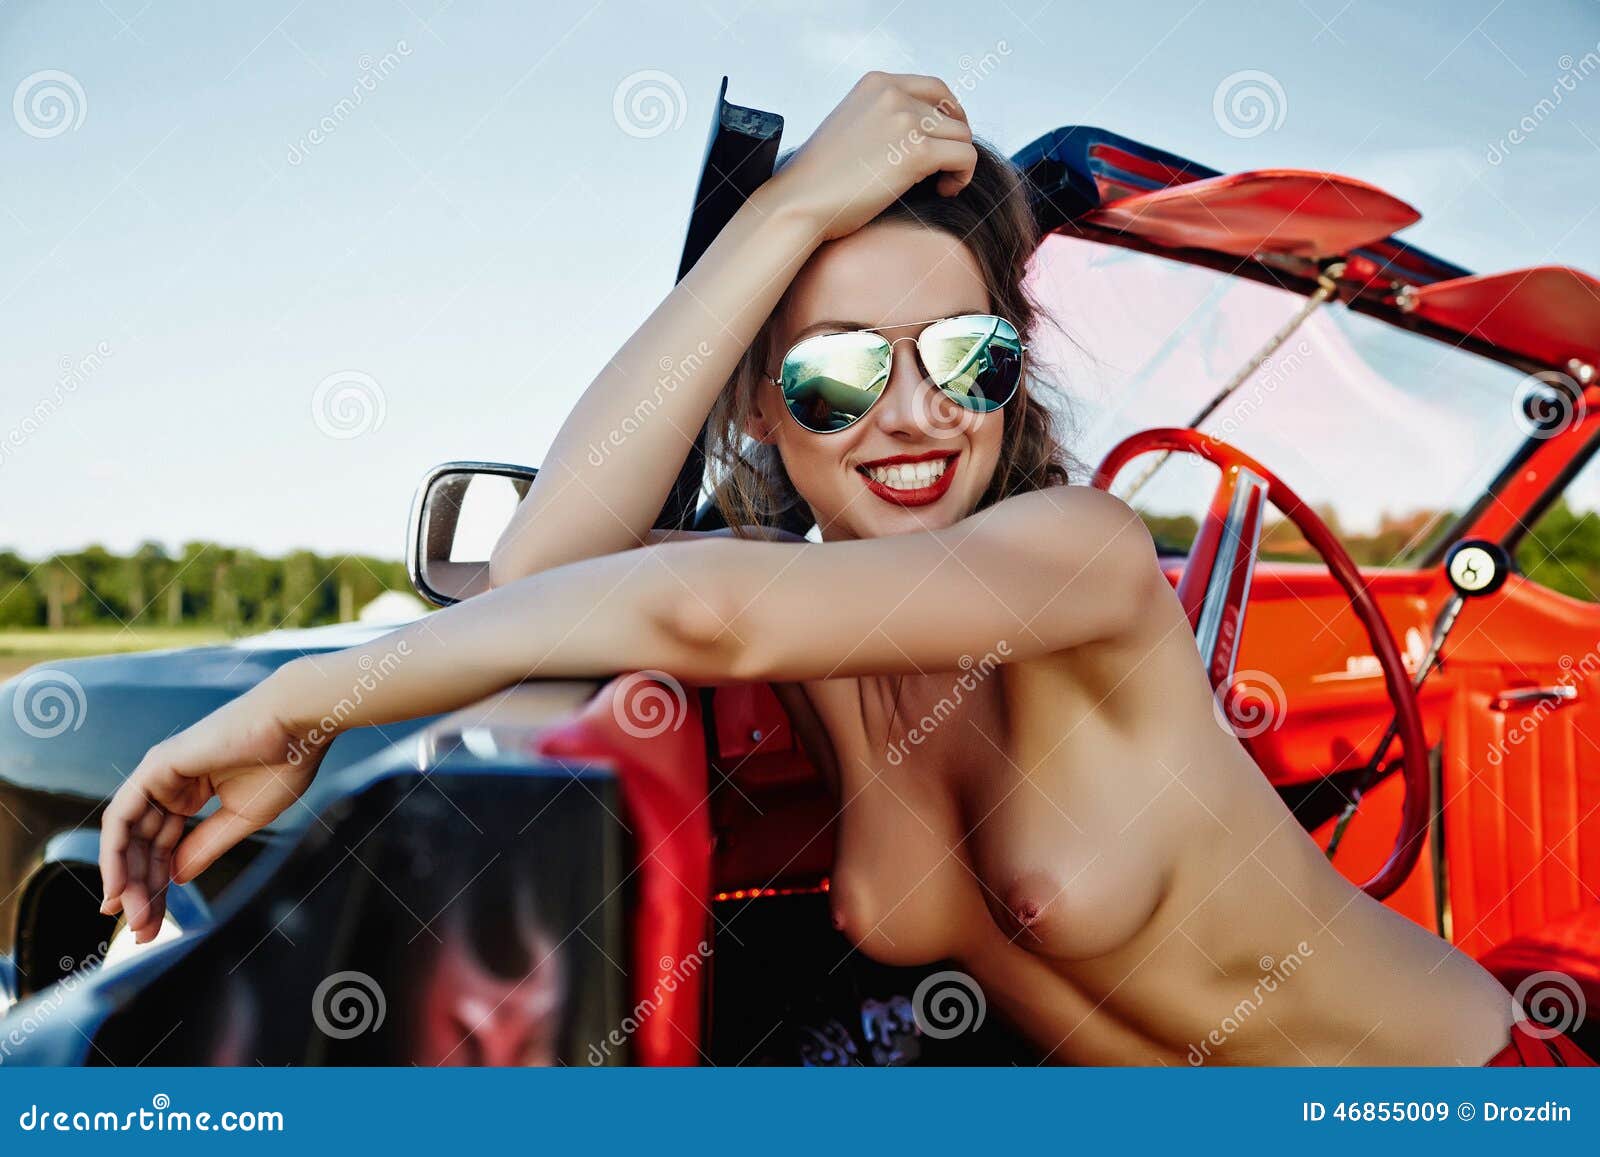 Best of Topless women in cars